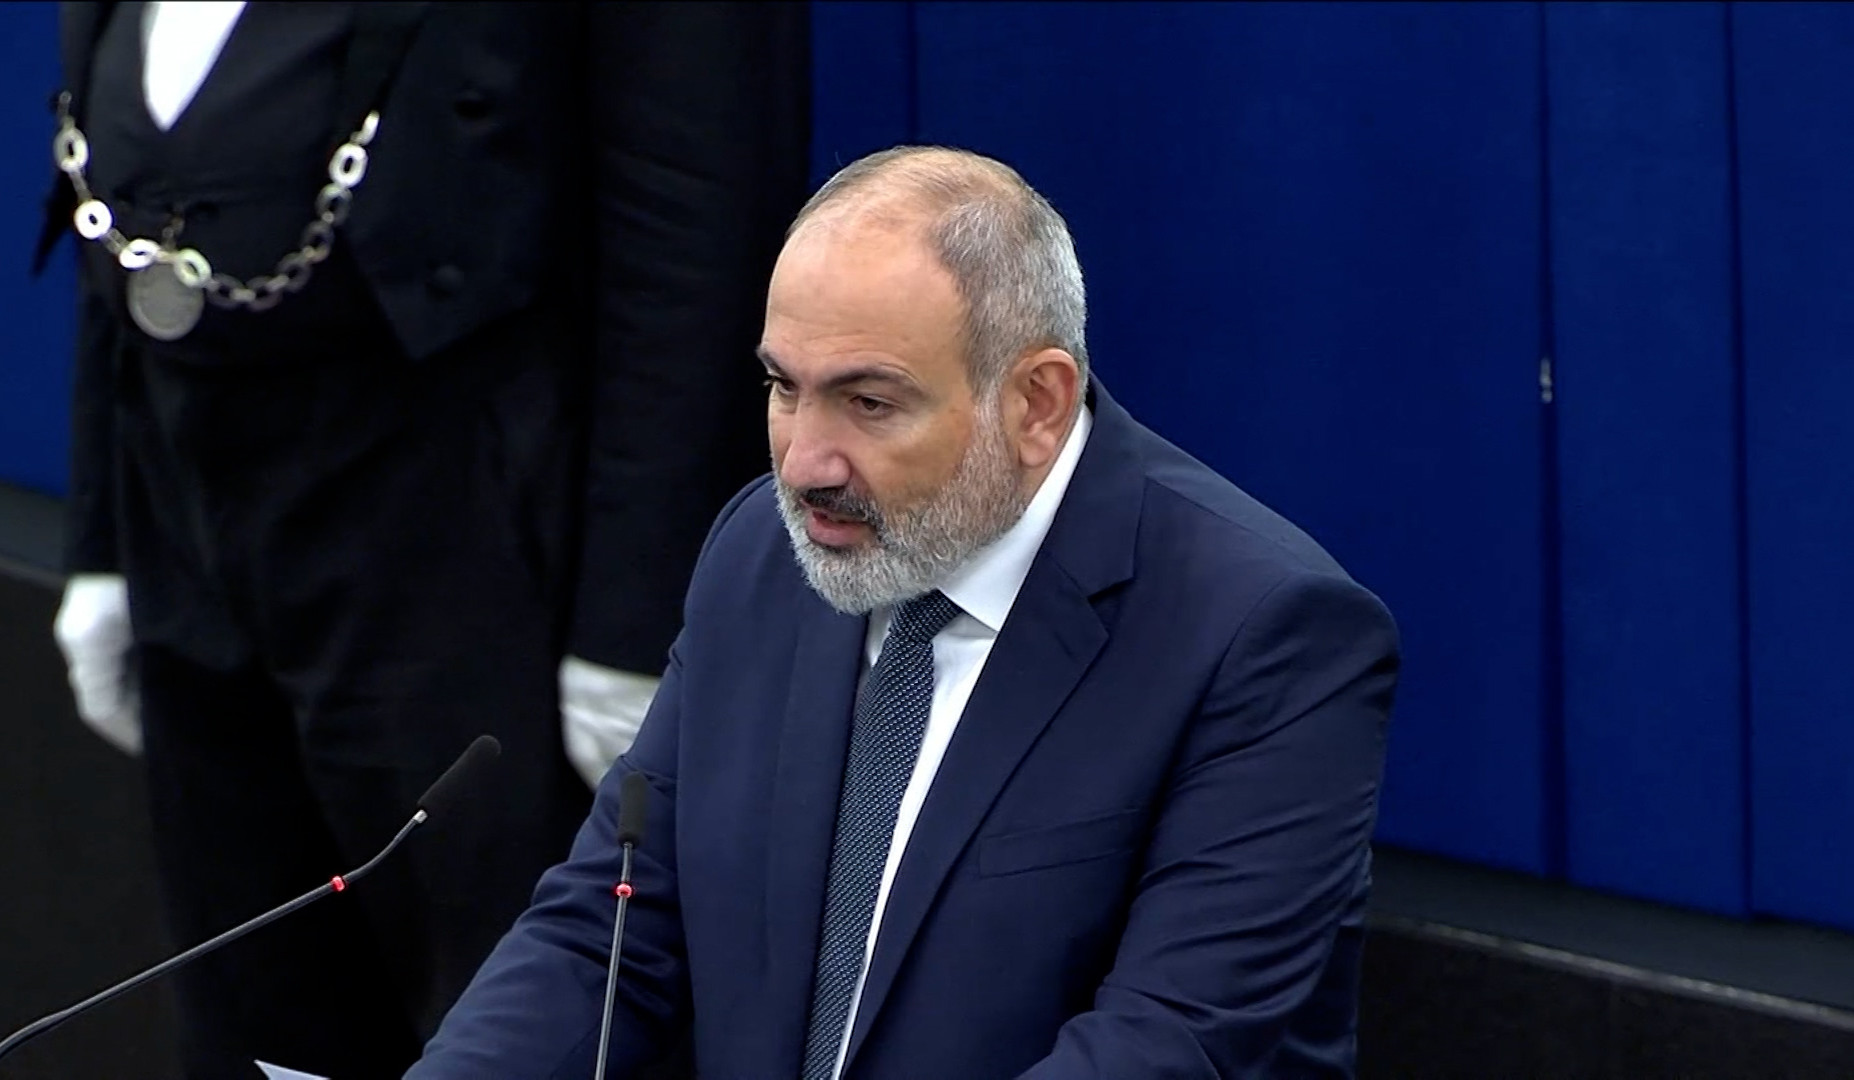 Armenia needs international assistance to overcome humanitarian crisis resulting from Nagorno-Karabakh exodus, Armenian Prime Minister